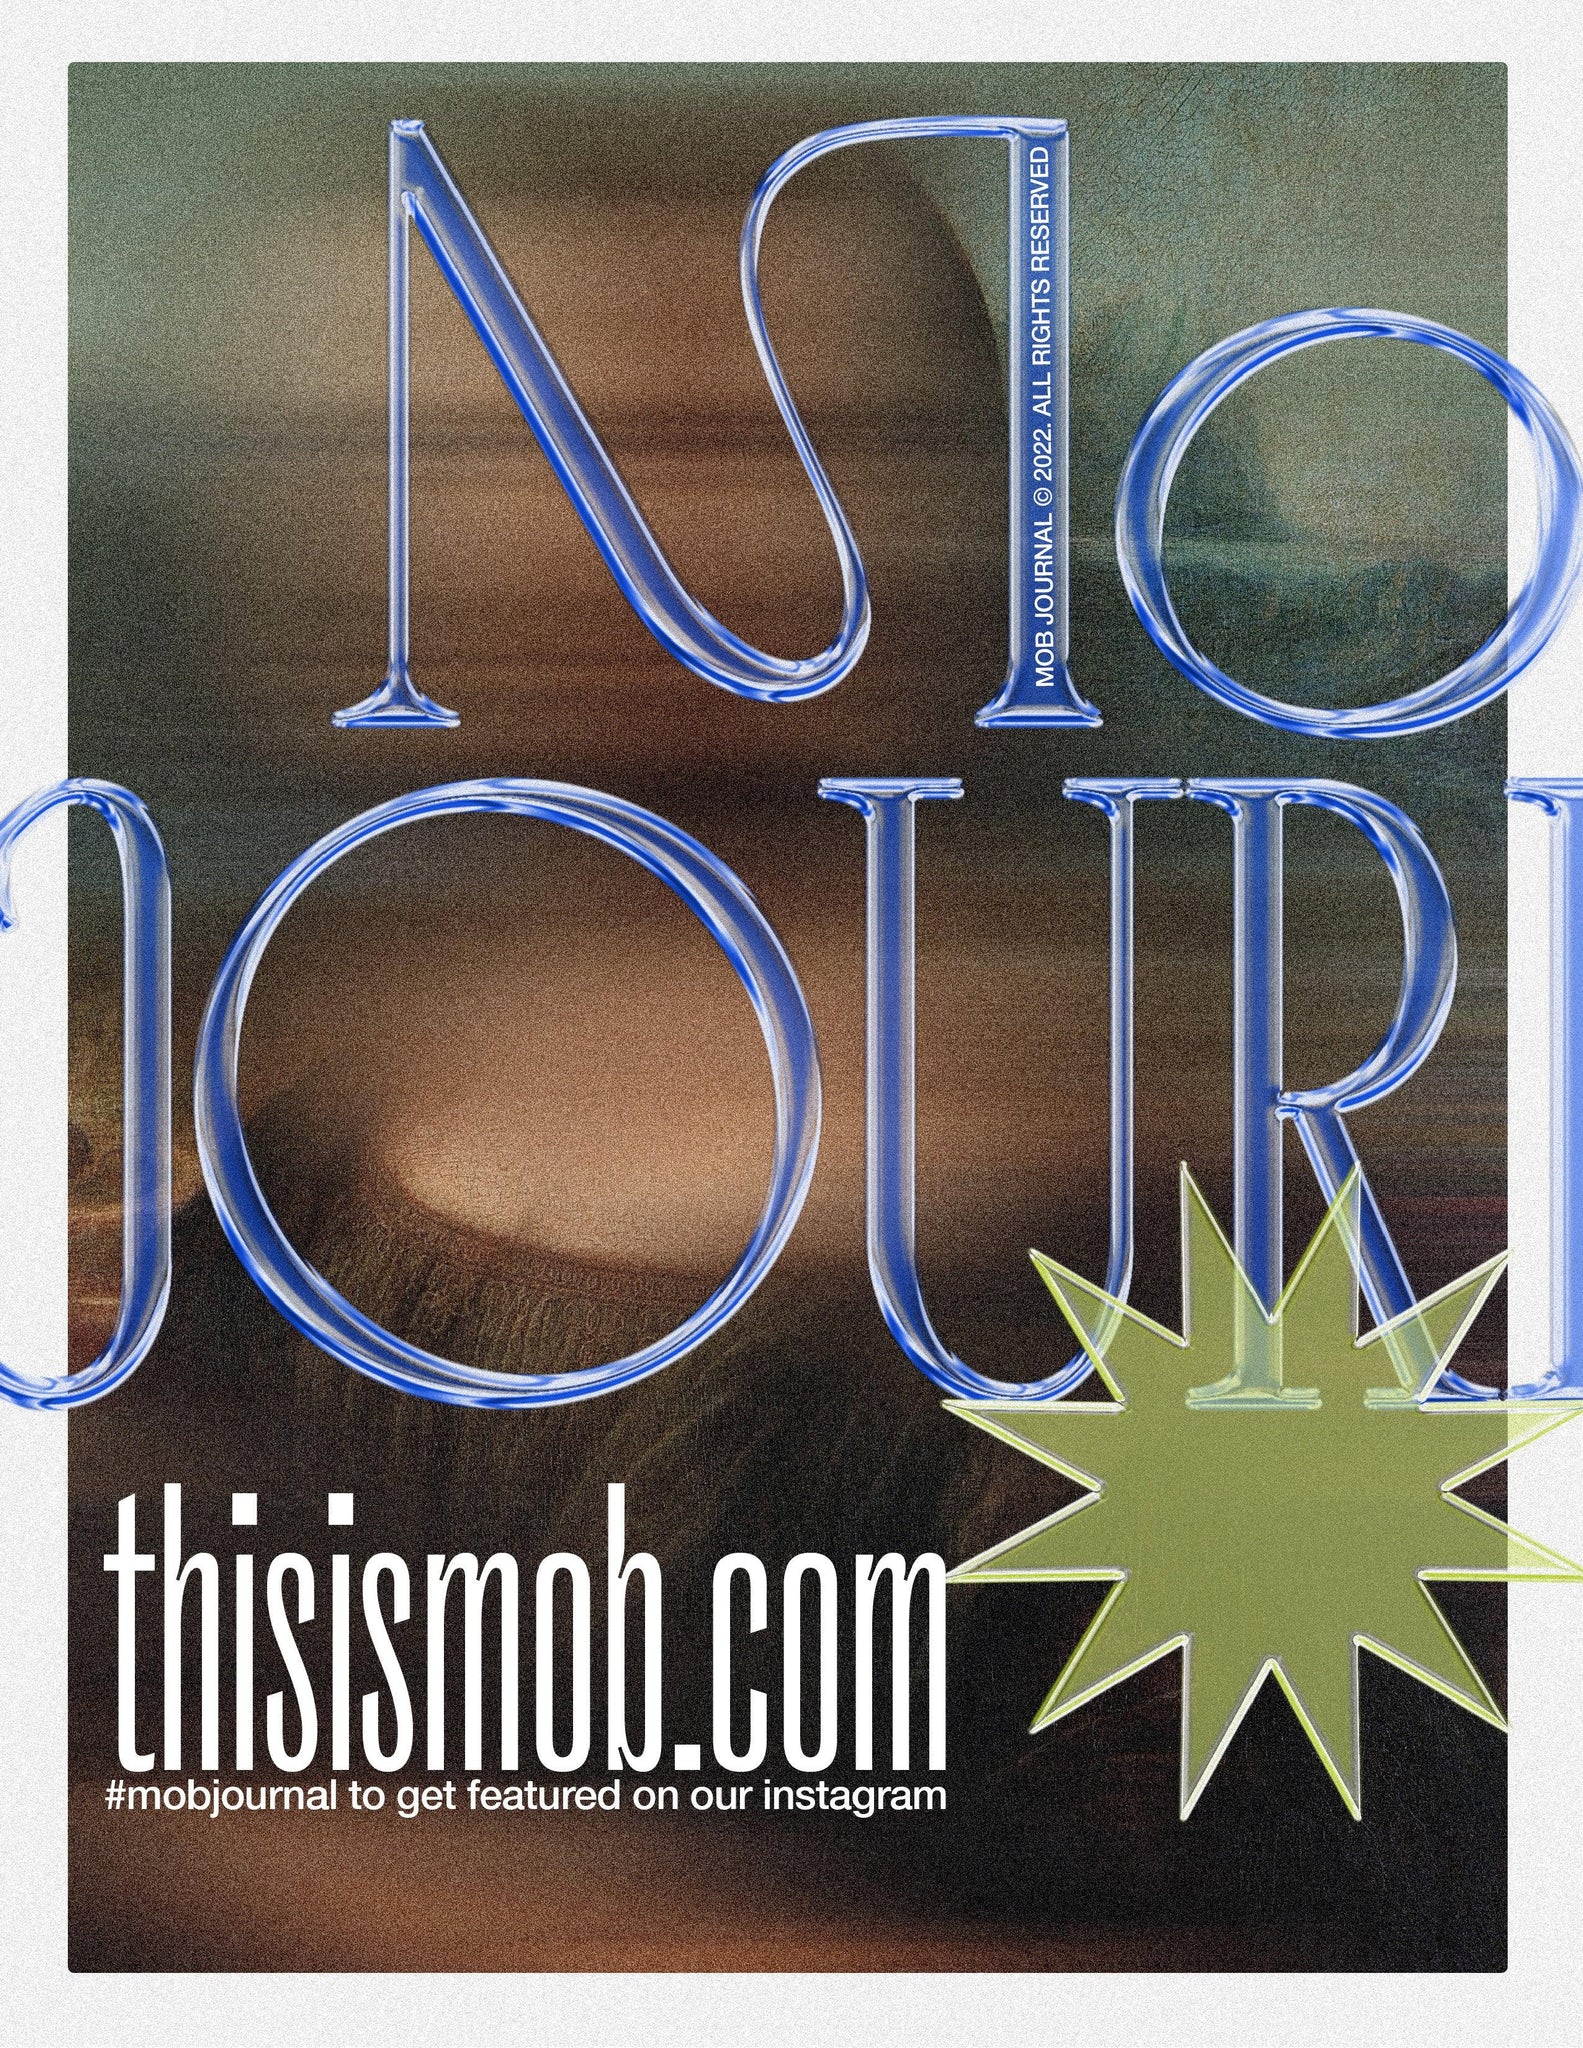 MOB JOURNAL | VOLUME TWENTY SIX | ISSUE #08 - Mob Journal